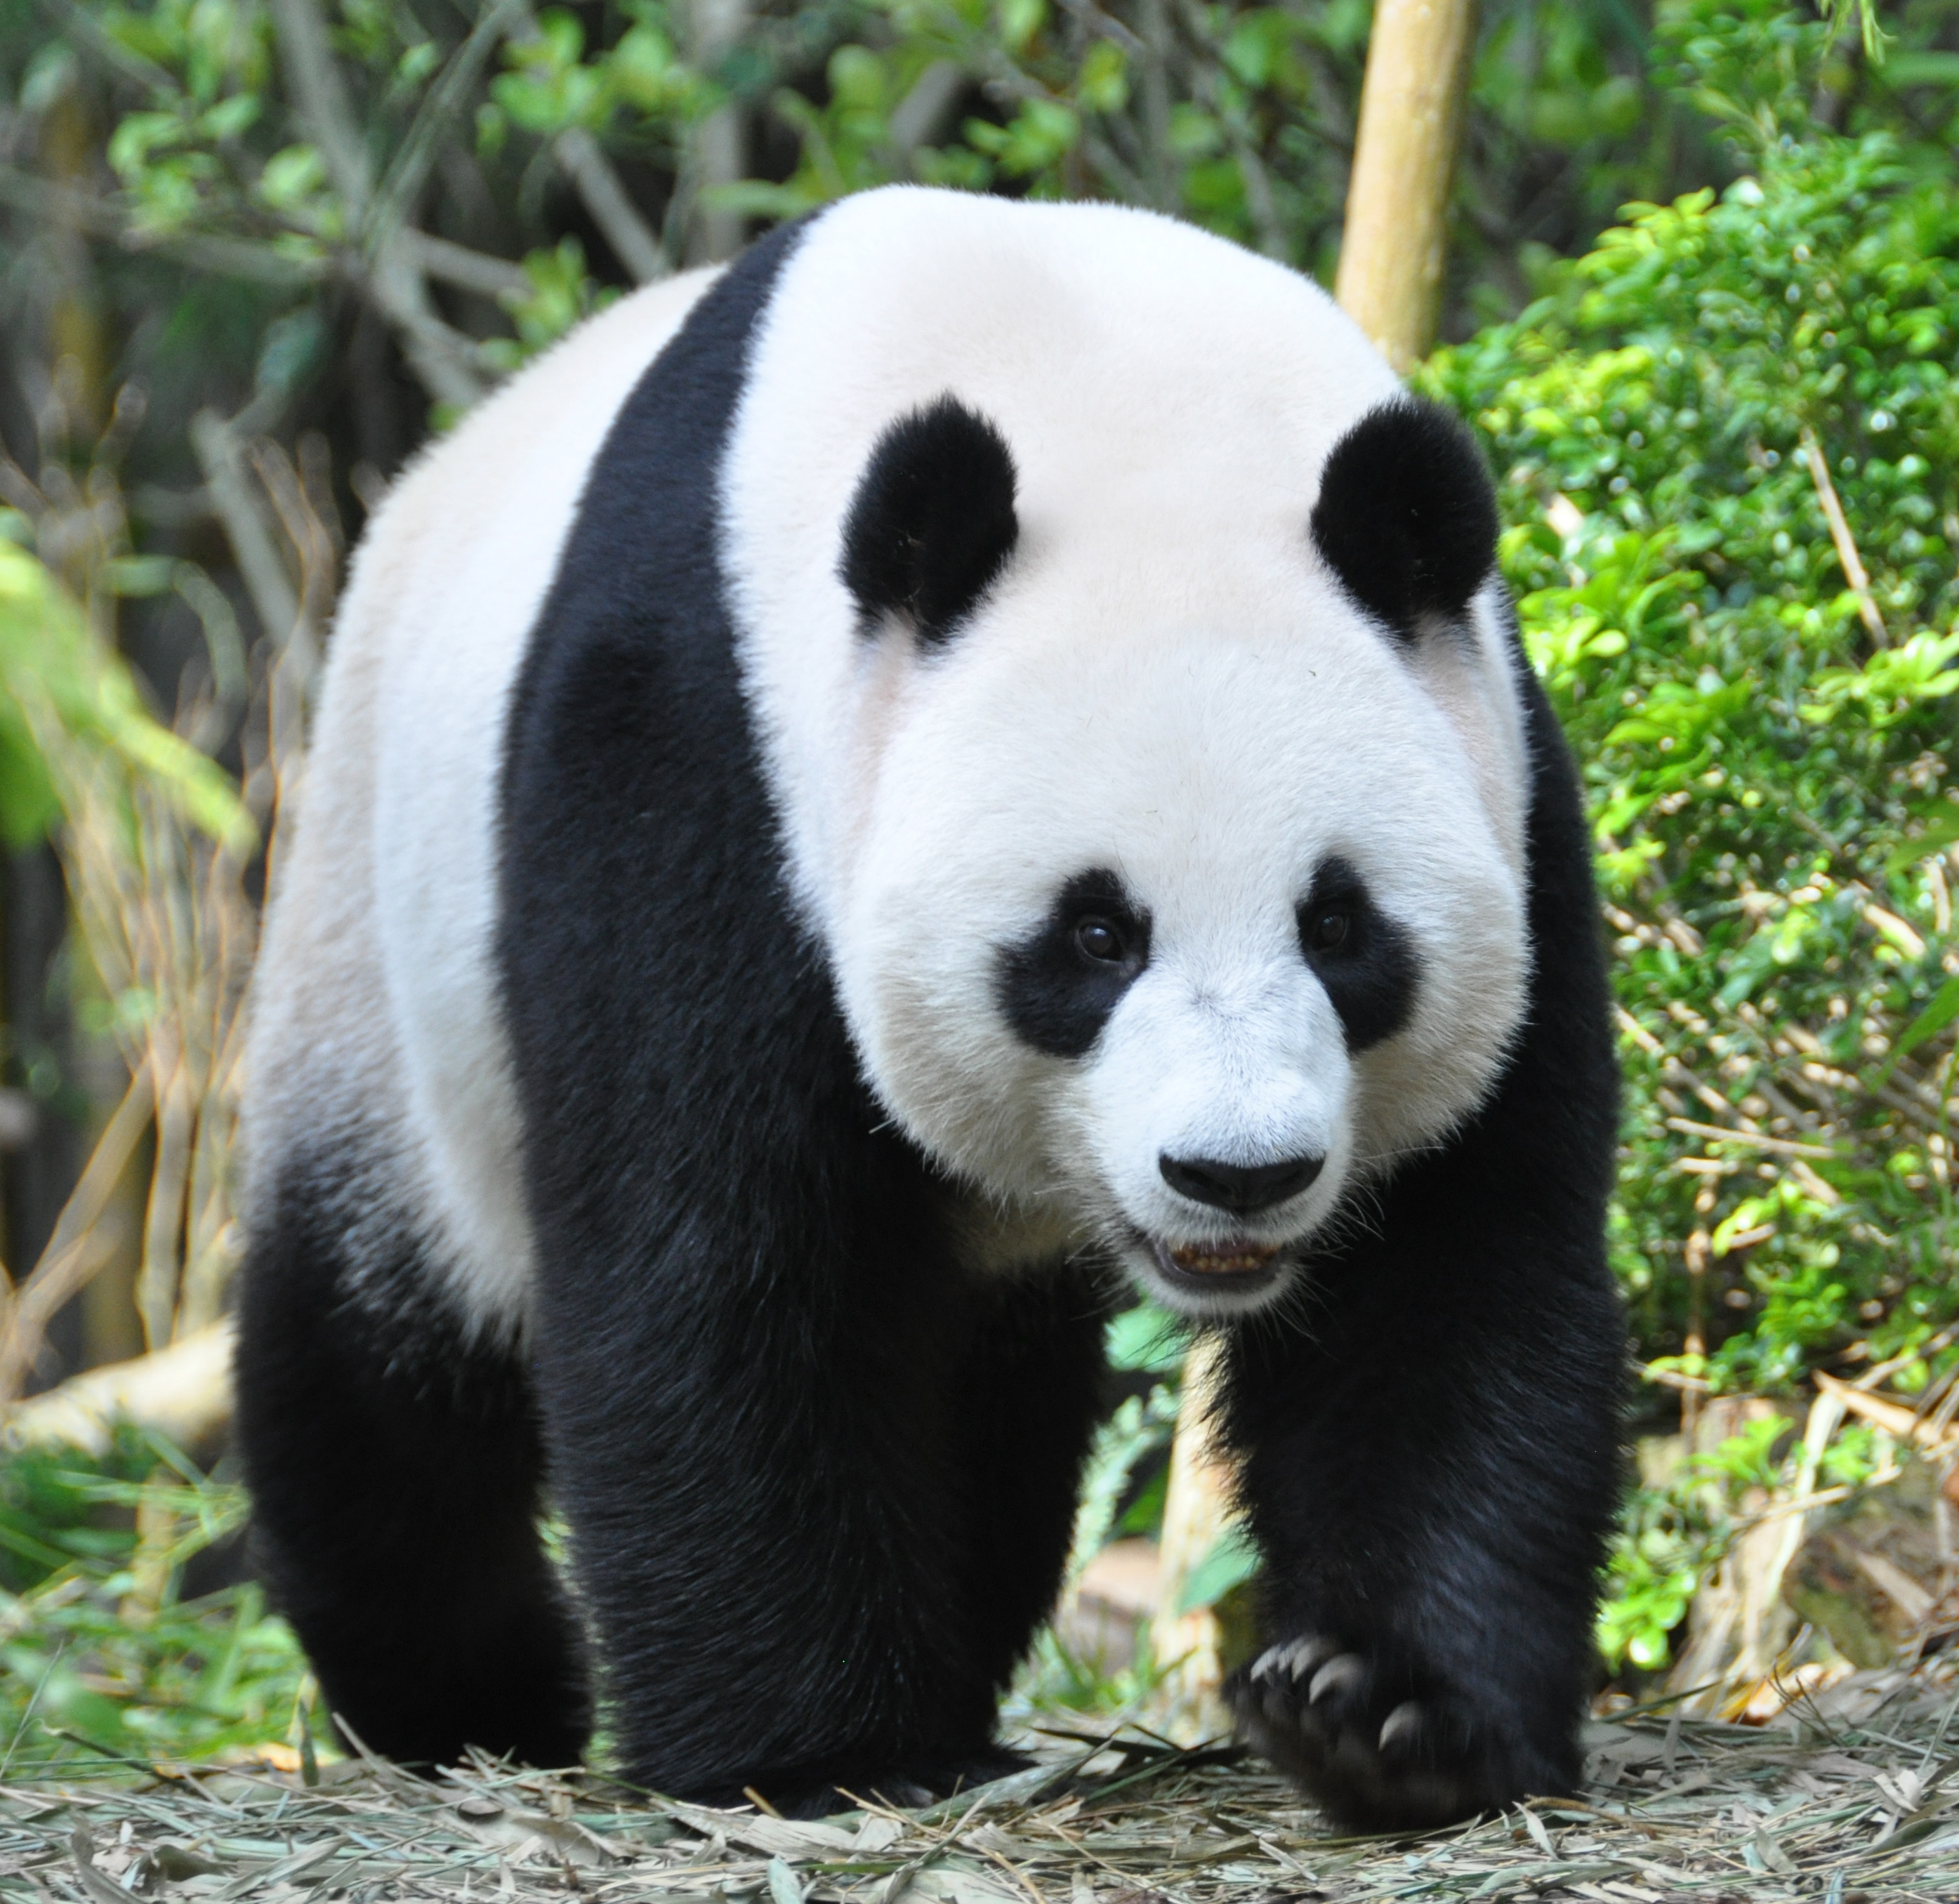 125955 descargar imagen animales, bozal, animal, panda, garras: fondos de pantalla y protectores de pantalla gratis